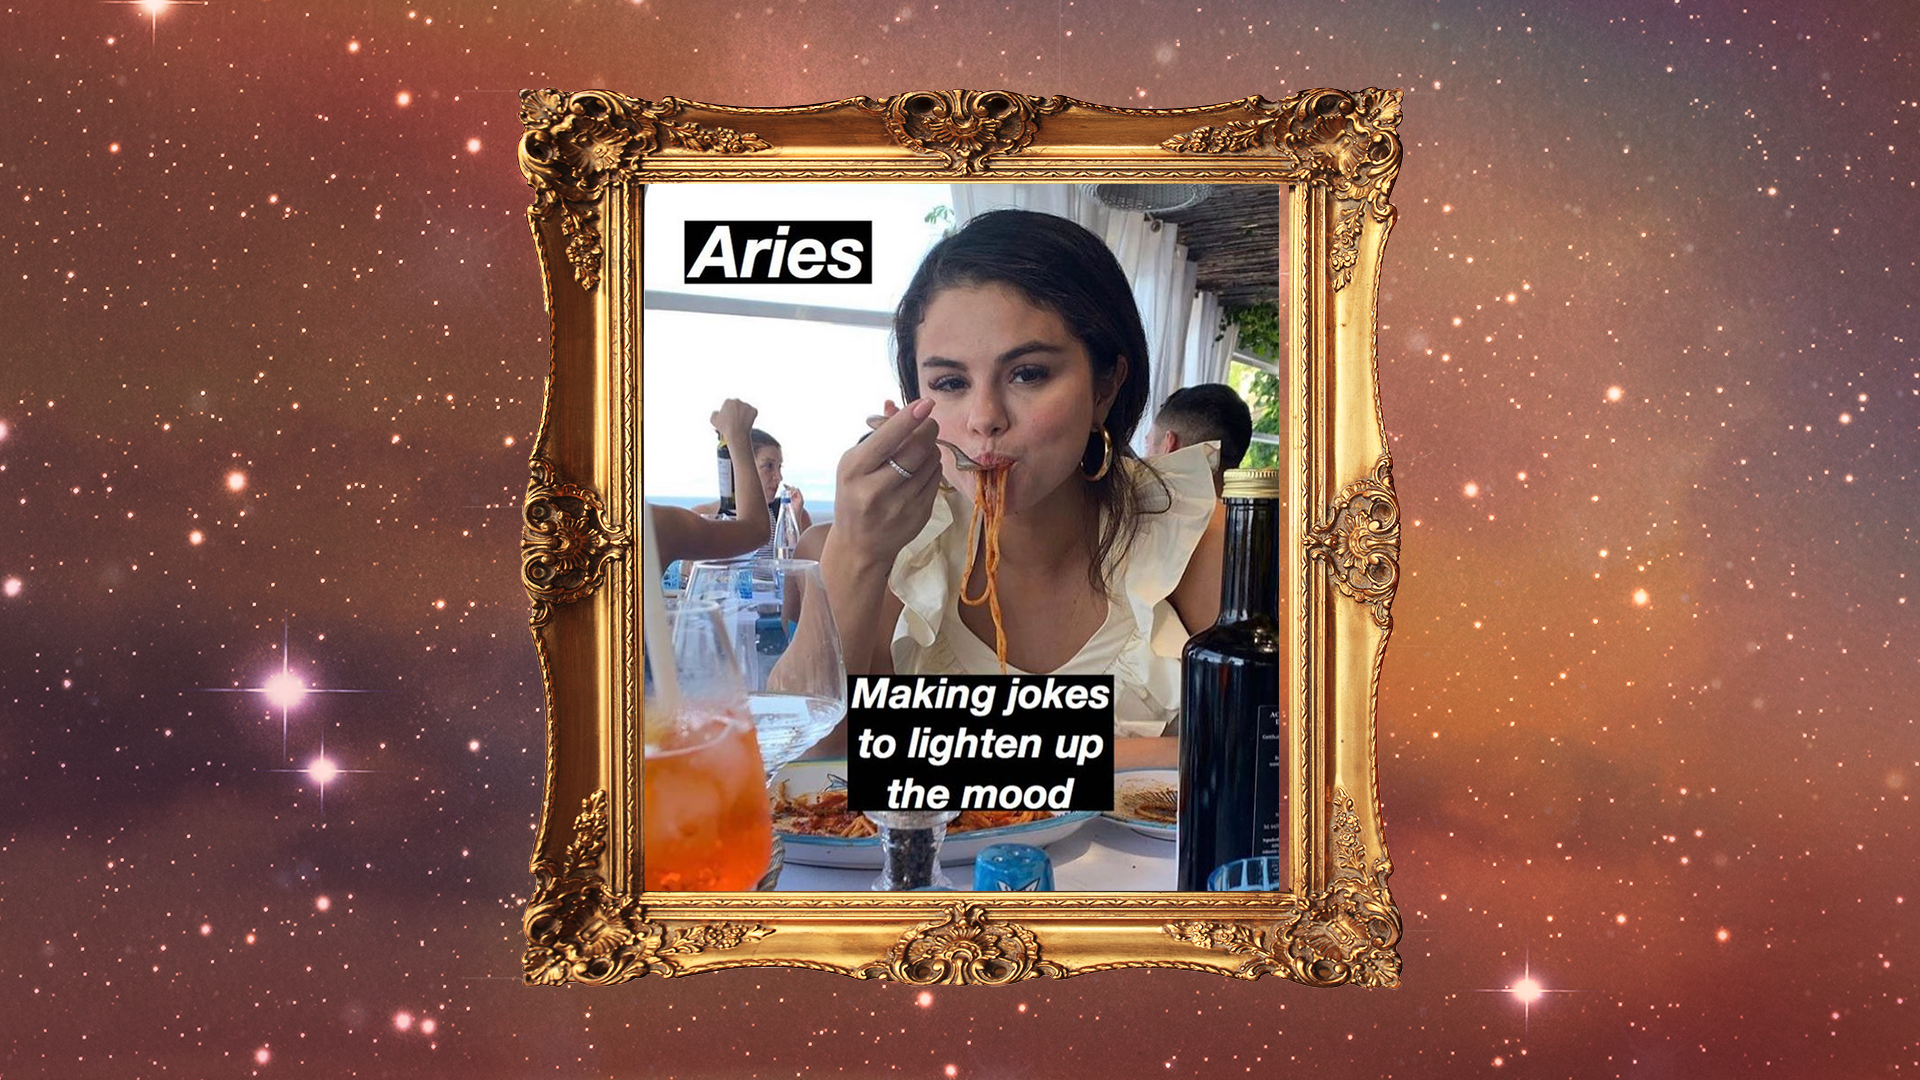 Best Aries Memes - Funny Astrology Memes on Instagram